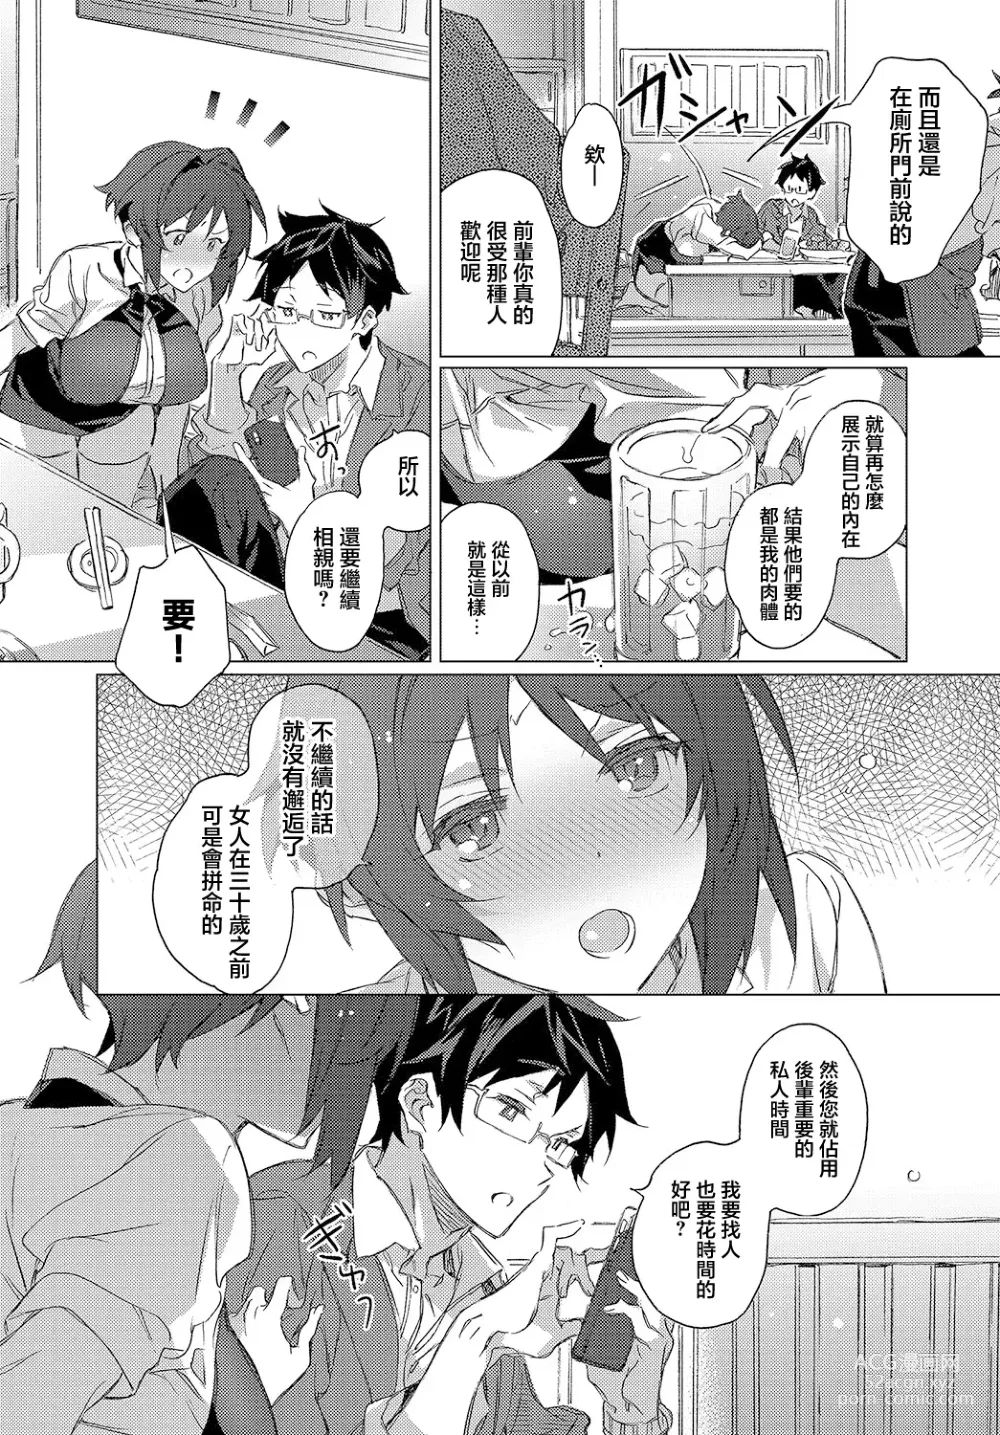 Page 2 of manga 真心莫比烏斯環